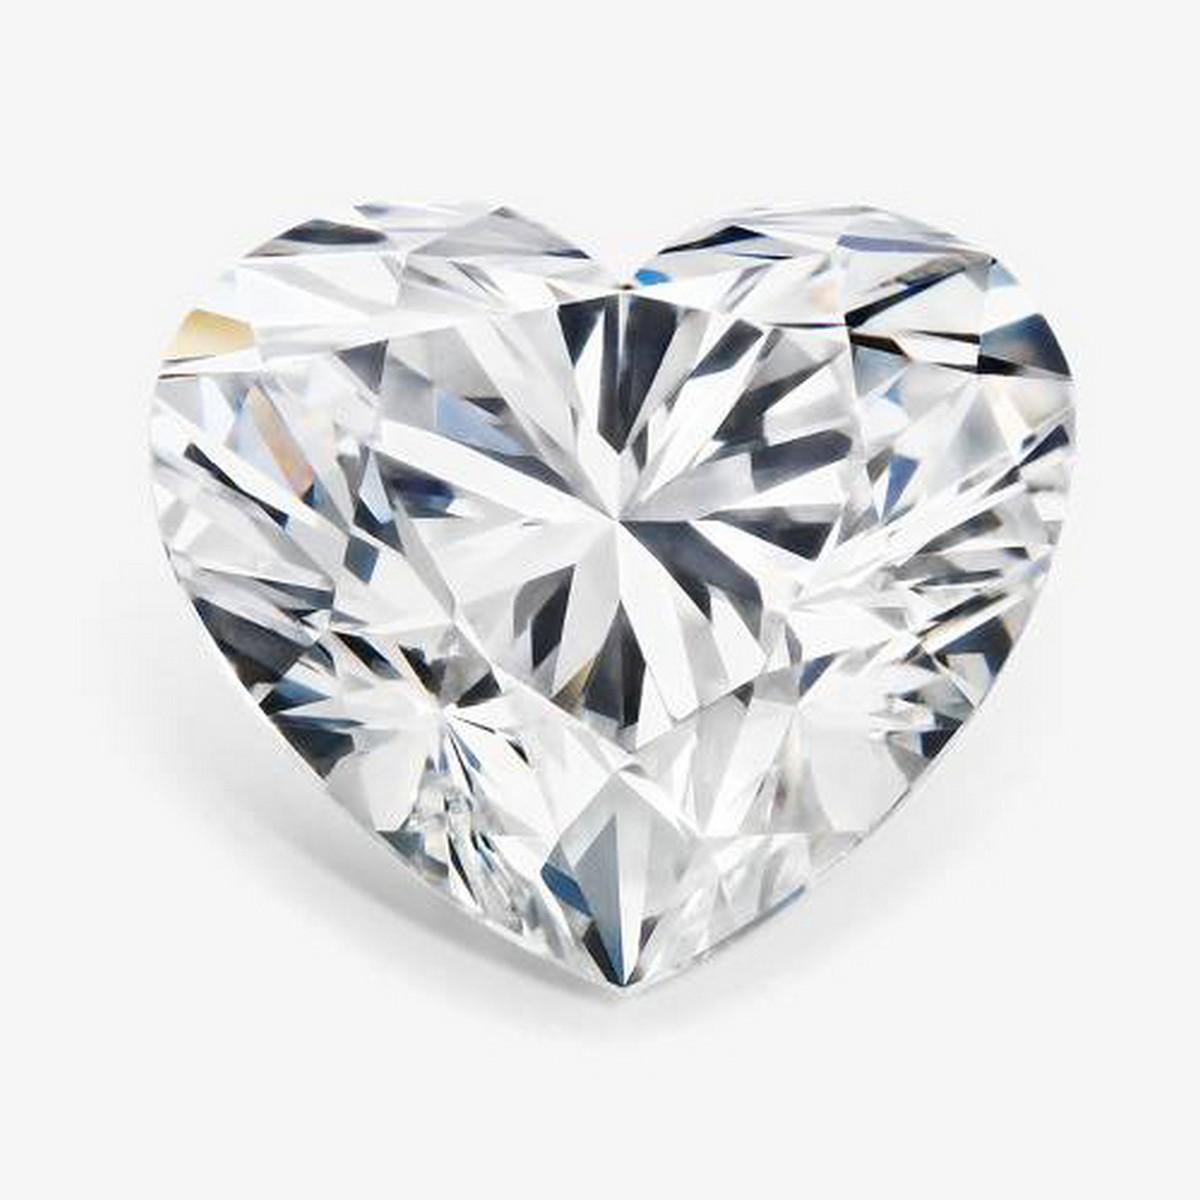 0.99 ctw. VVS2 IGI Certified Heart Cut Loose Diamond (LAB GROWN)